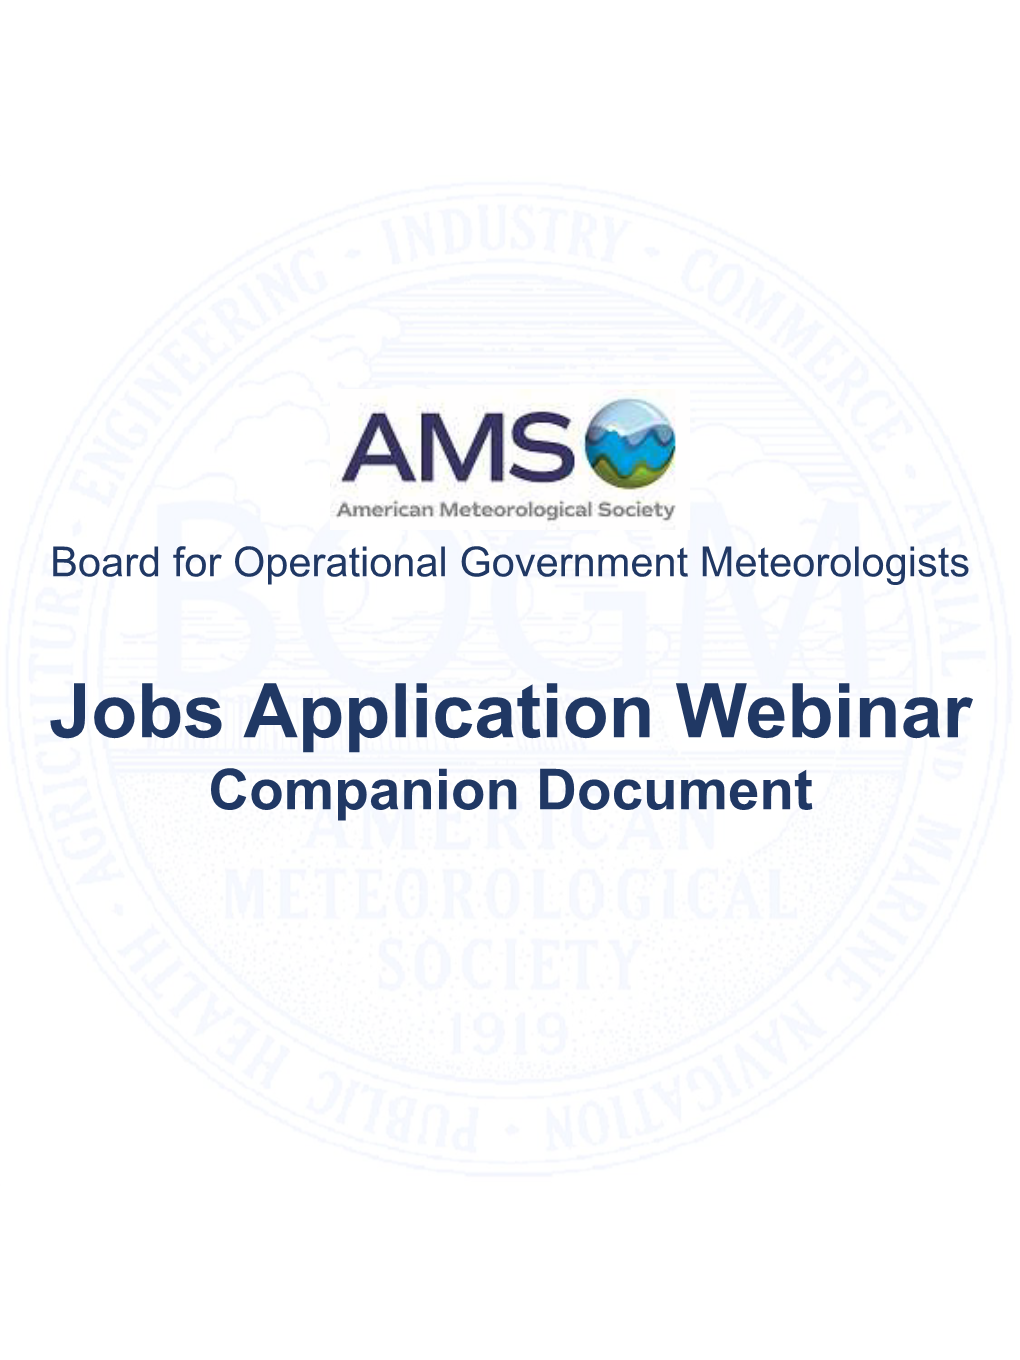 Jobs Application Webinar Companion Document Introduction